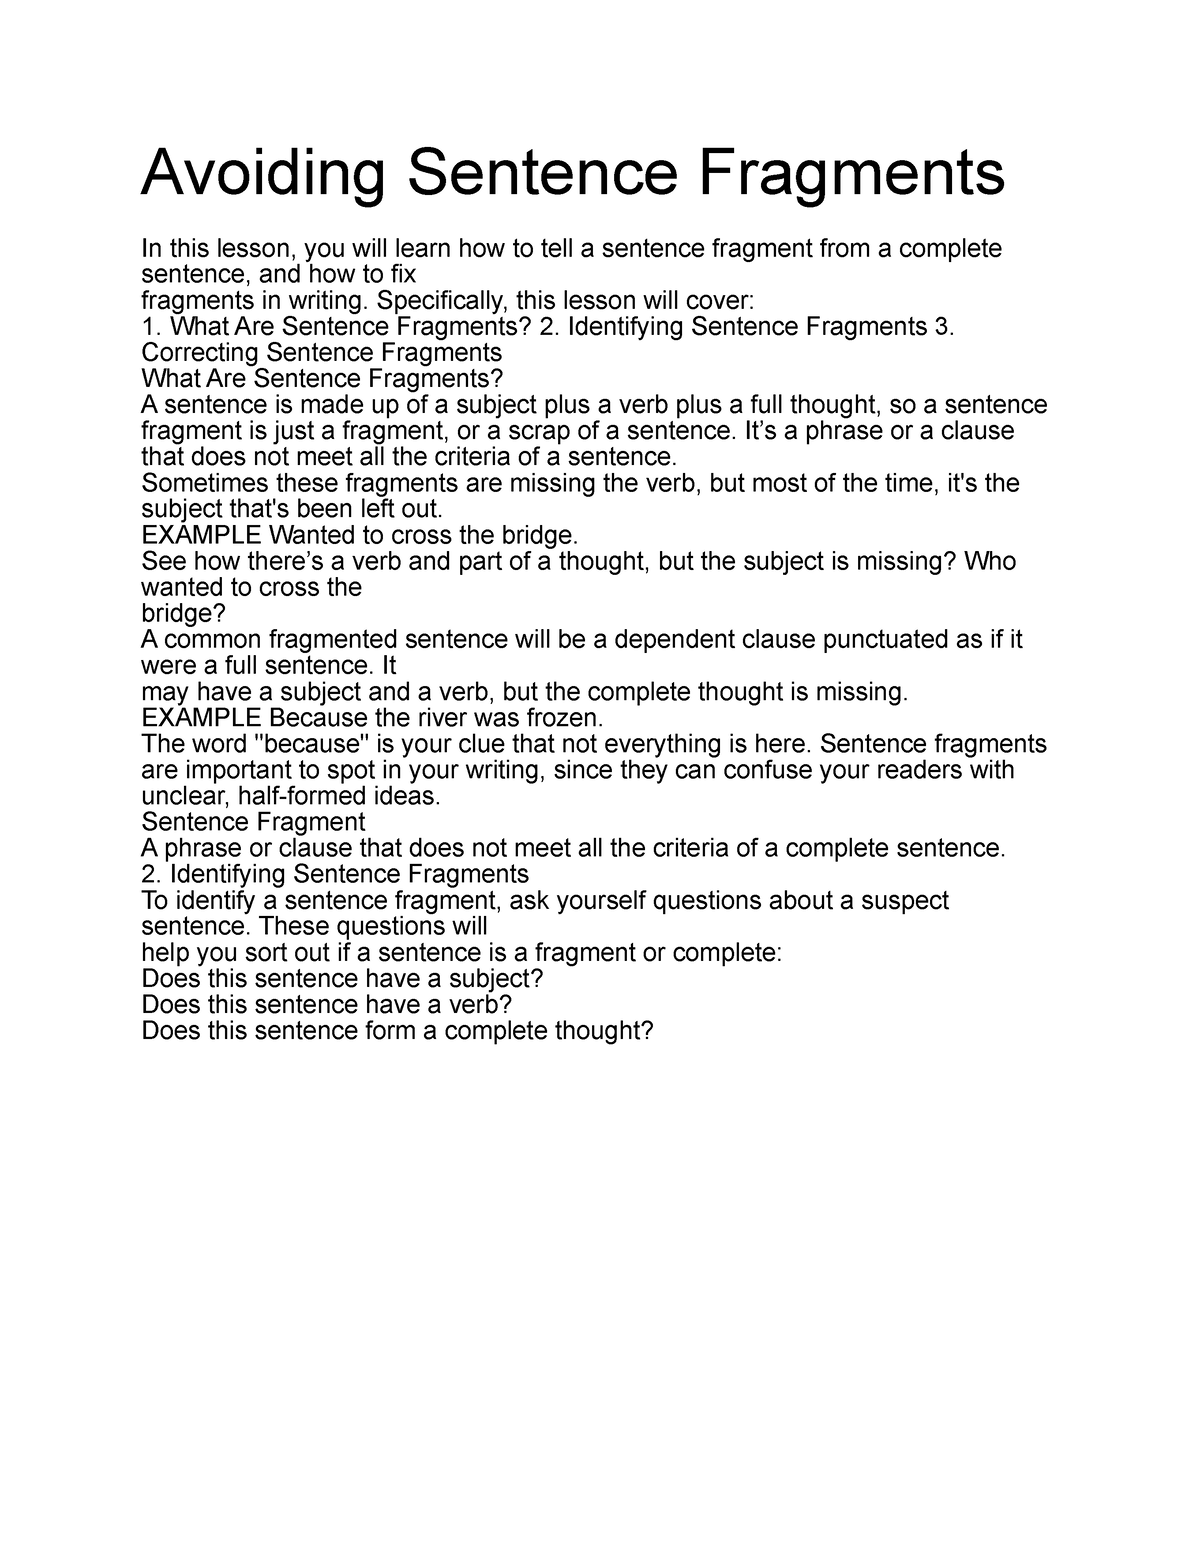 Identifying Sentence Fragments Practice B Worksheet 6 Answer Key